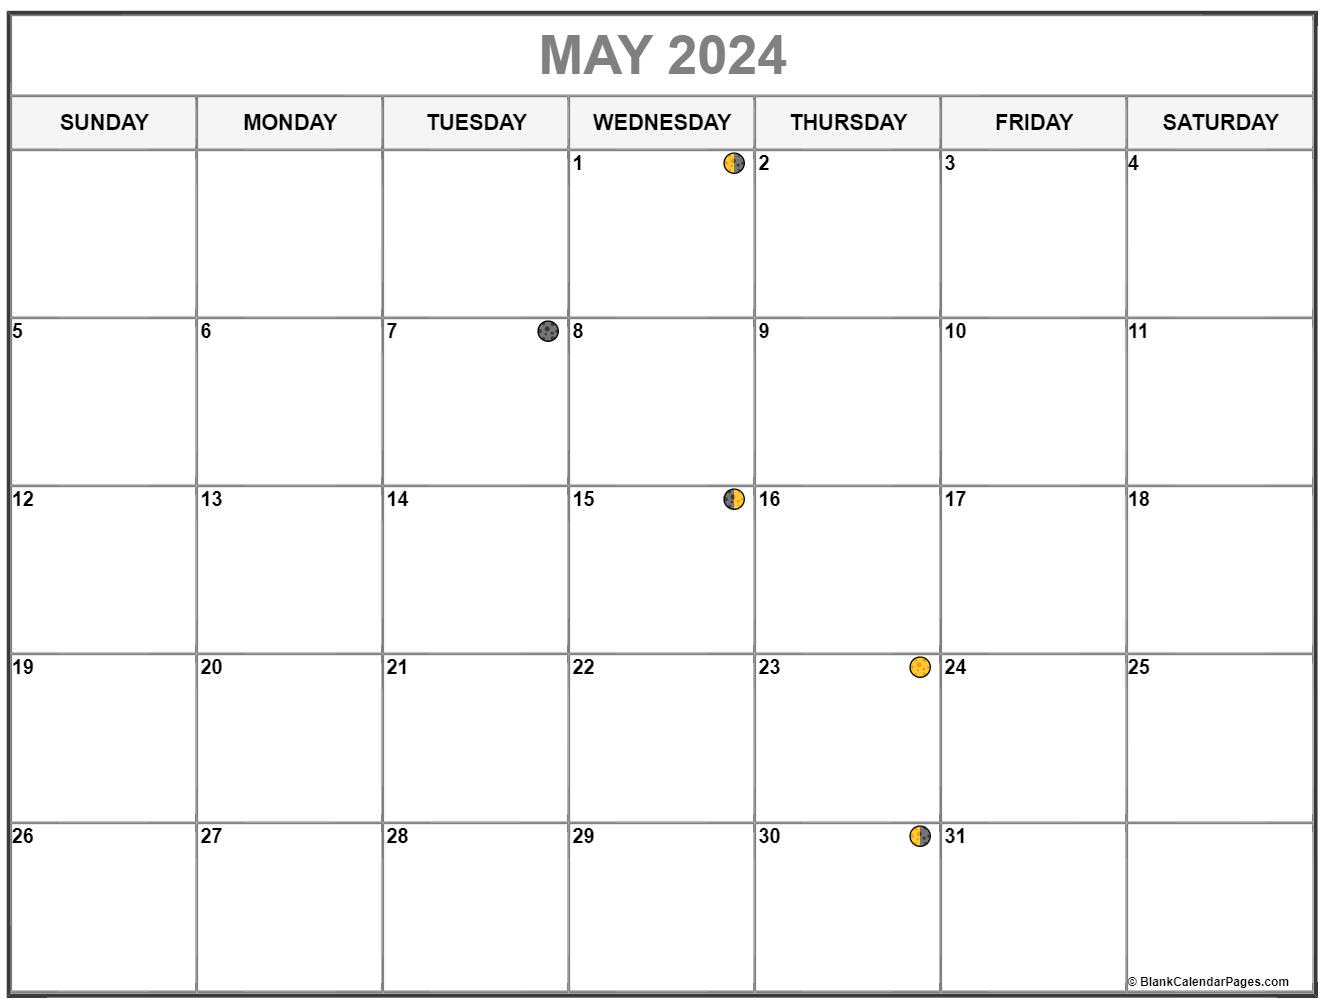 May 2020 Lunar Calendar | Moon Phase Calendar